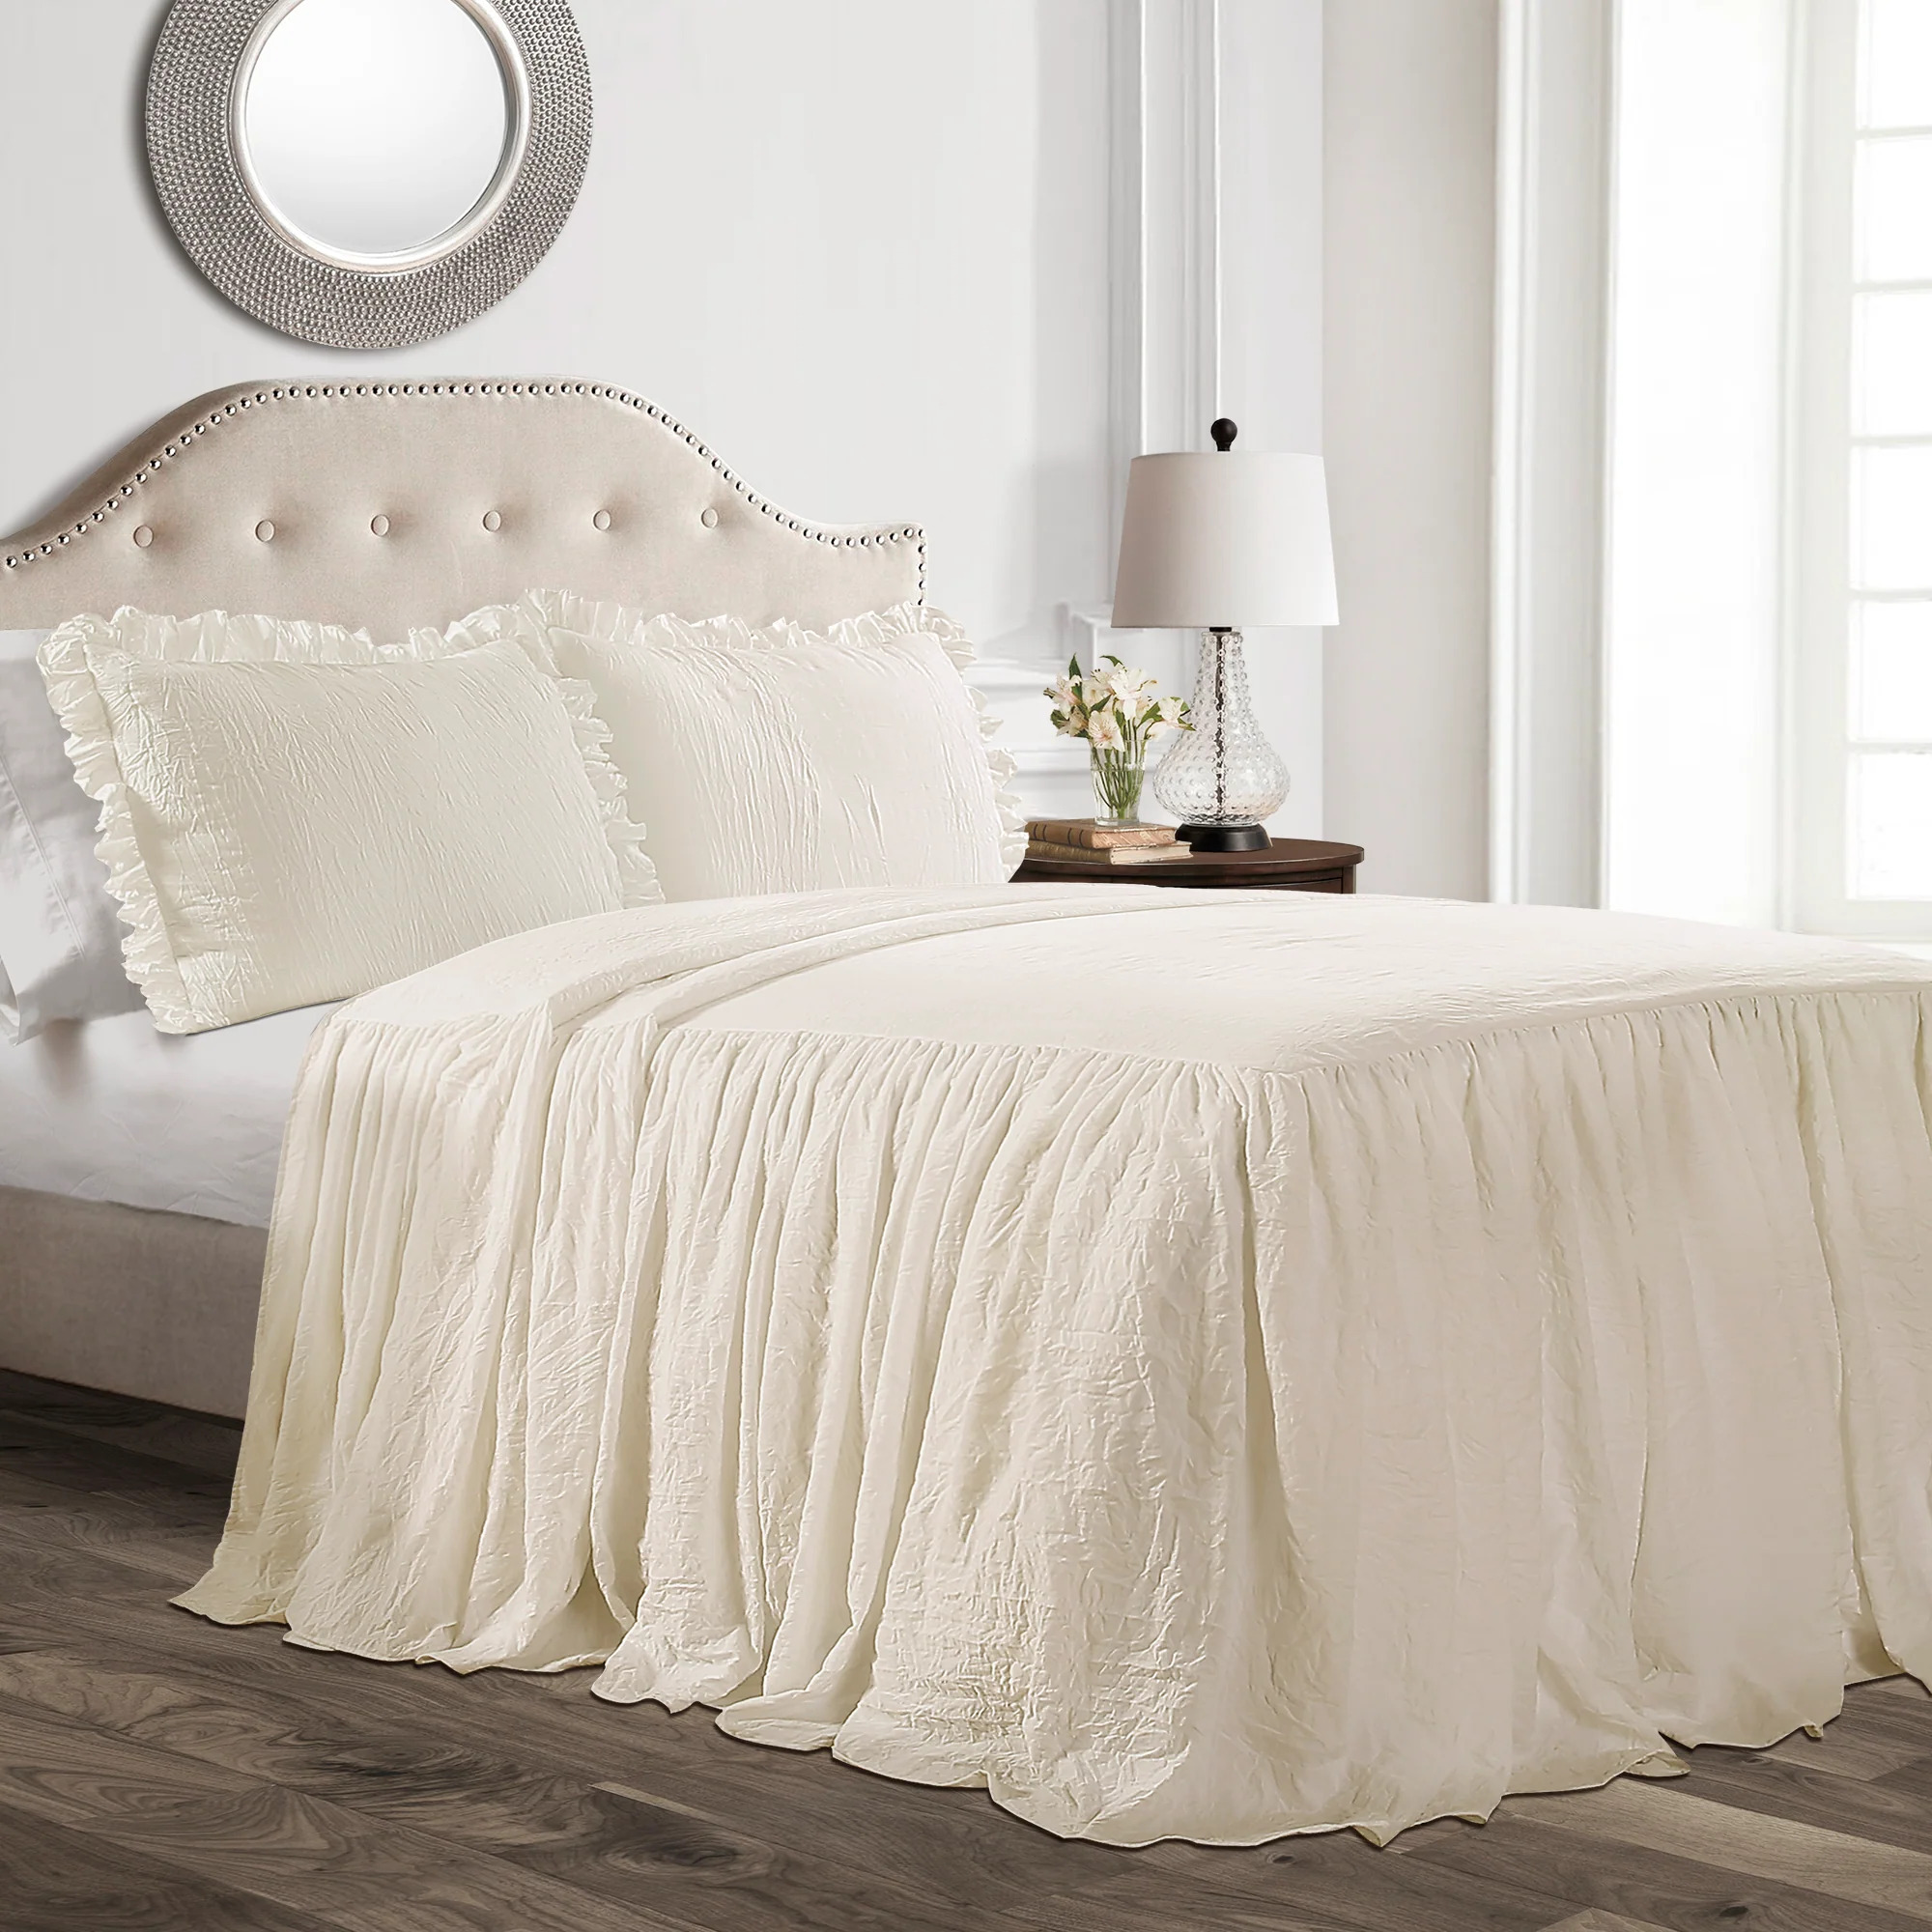 Lush Decor Ruffle Skirt 3-Piece Ivory Bedspread Set - image 1 of 10